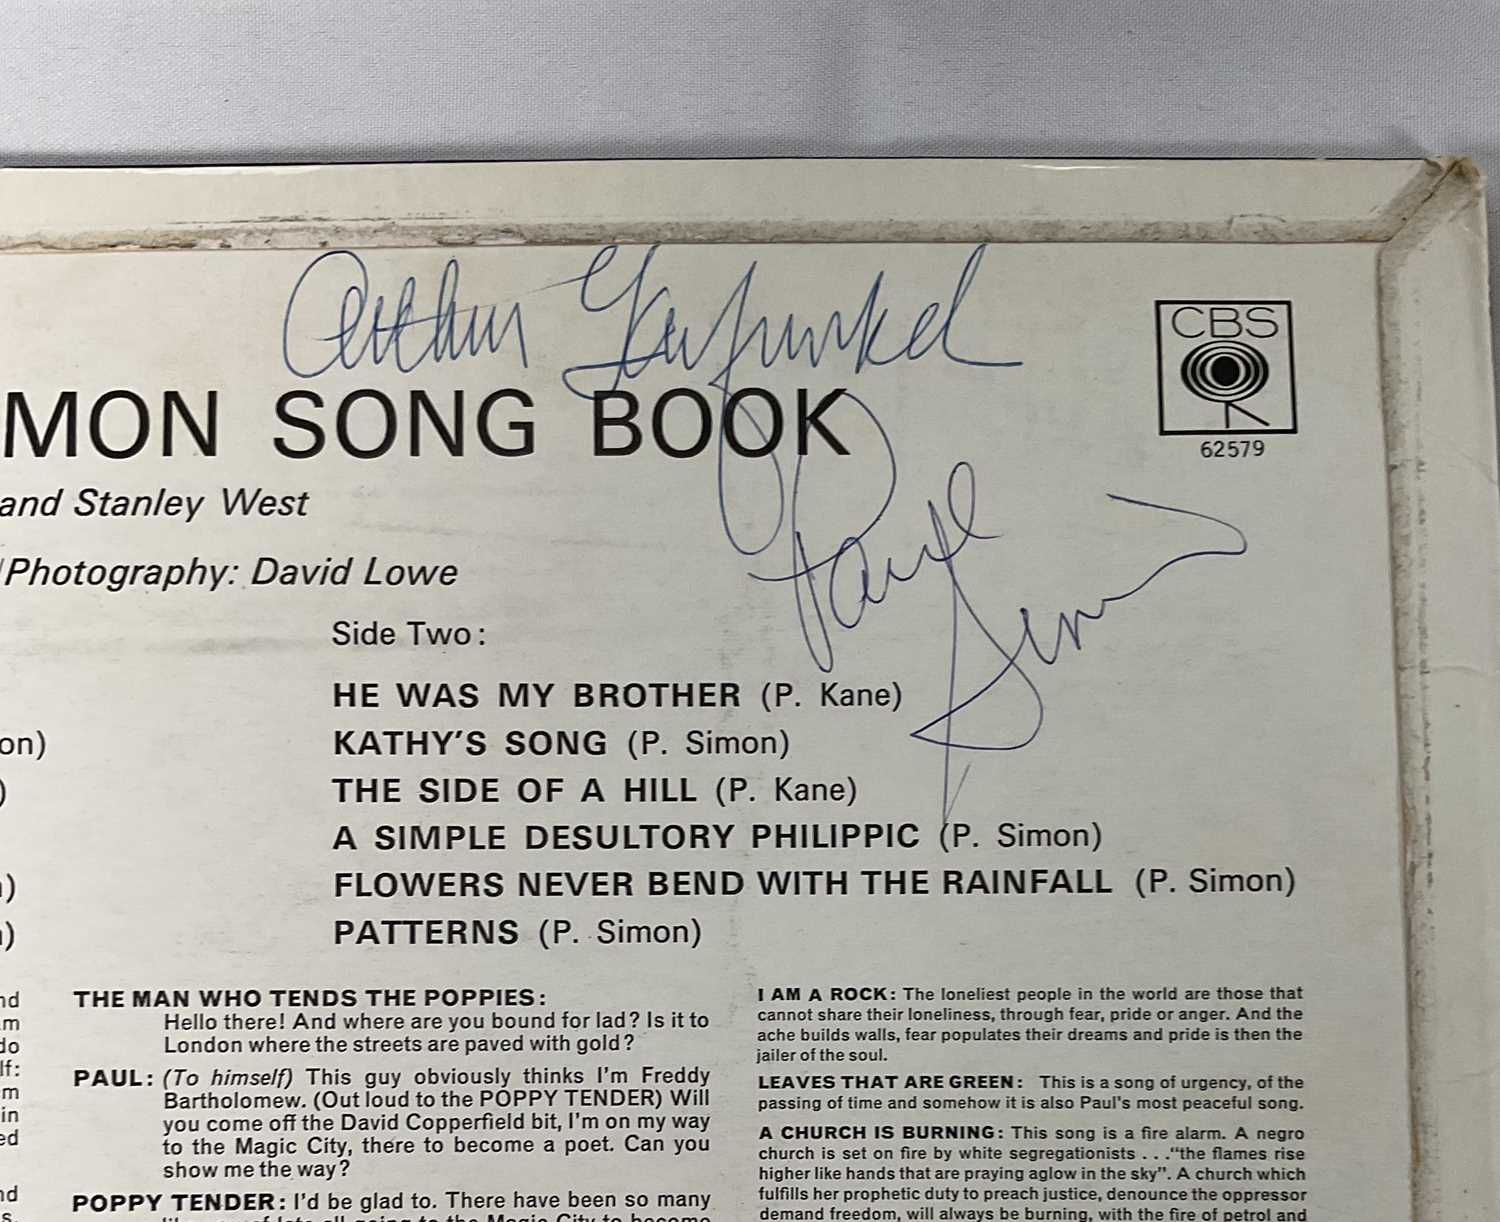 SIMON AND GARFUNKEL - The Paul Simon Song Book (1965) Vinyl LP signed in blue pen by Paul Simon - Image 2 of 3